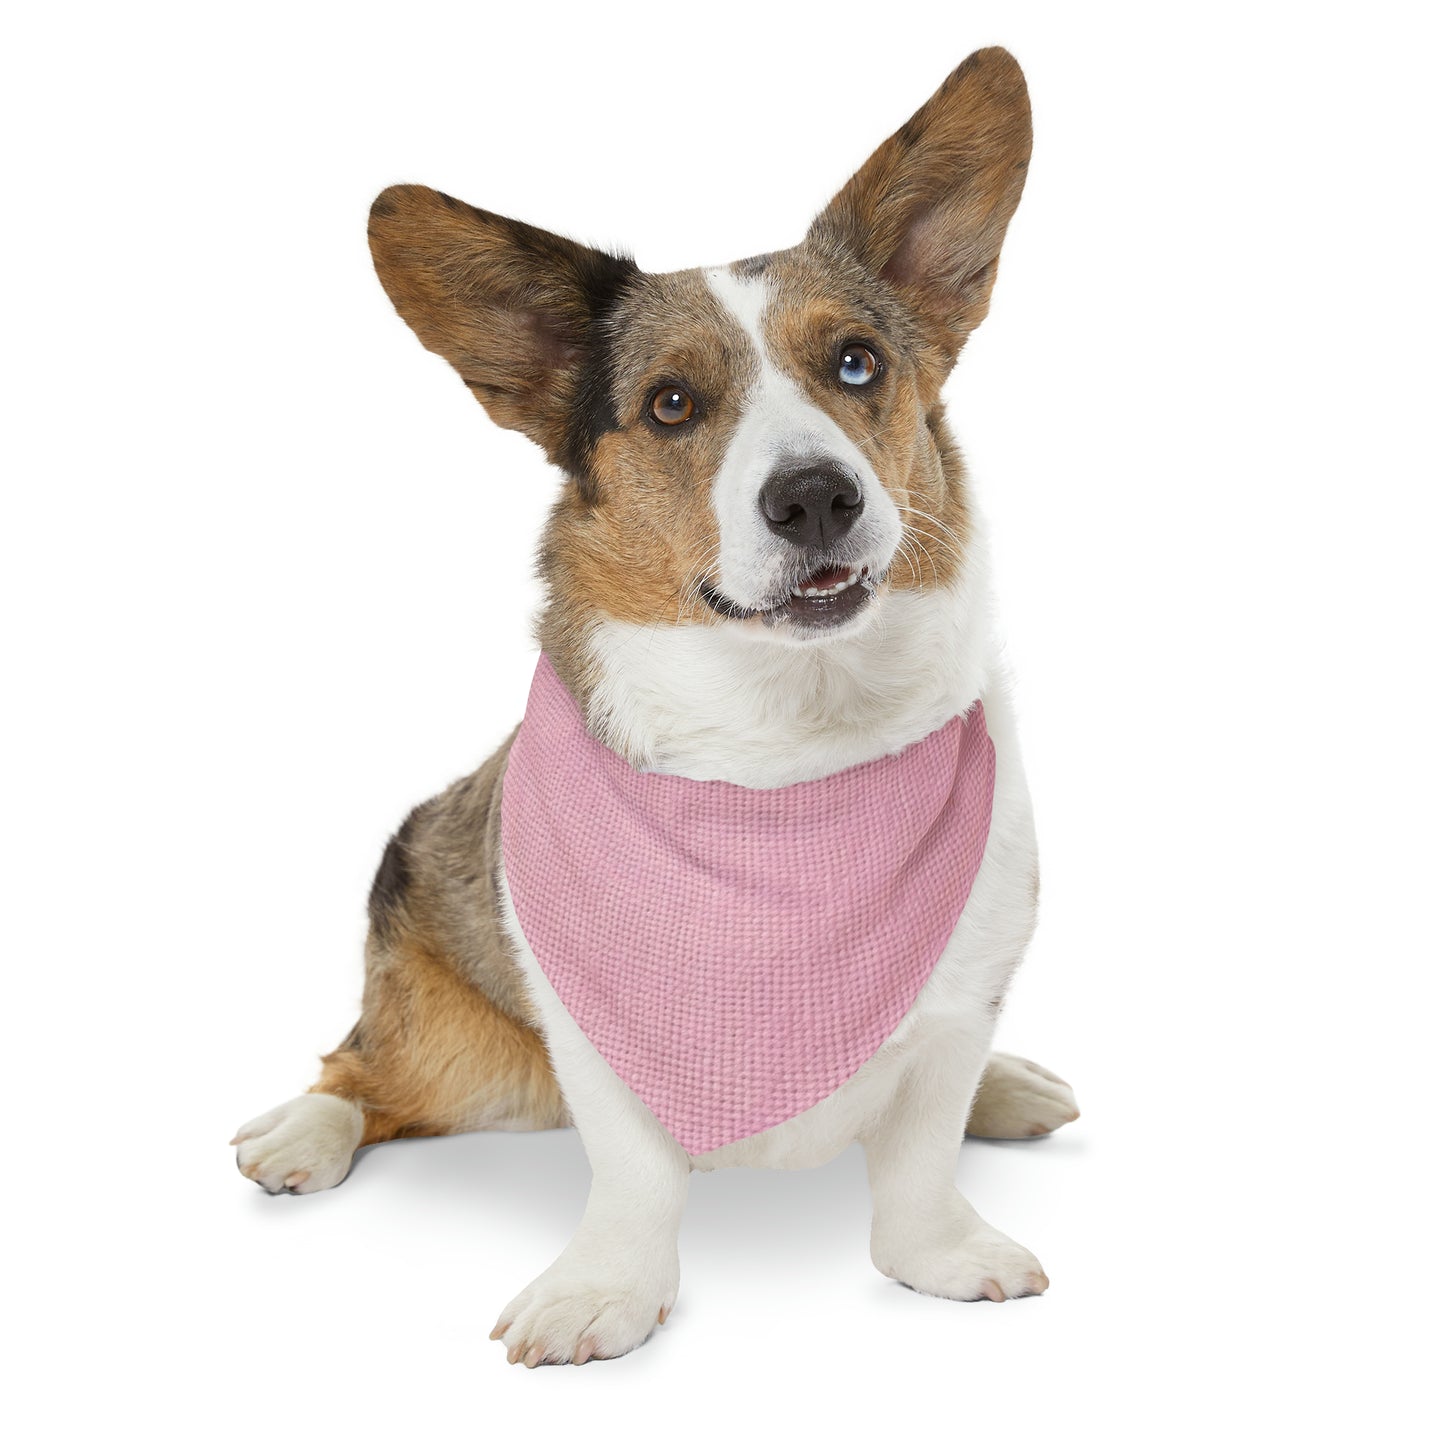 Blushing Garment Dye Pink: Denim-Inspired, Soft-Toned Fabric - Pet Bandana Collar